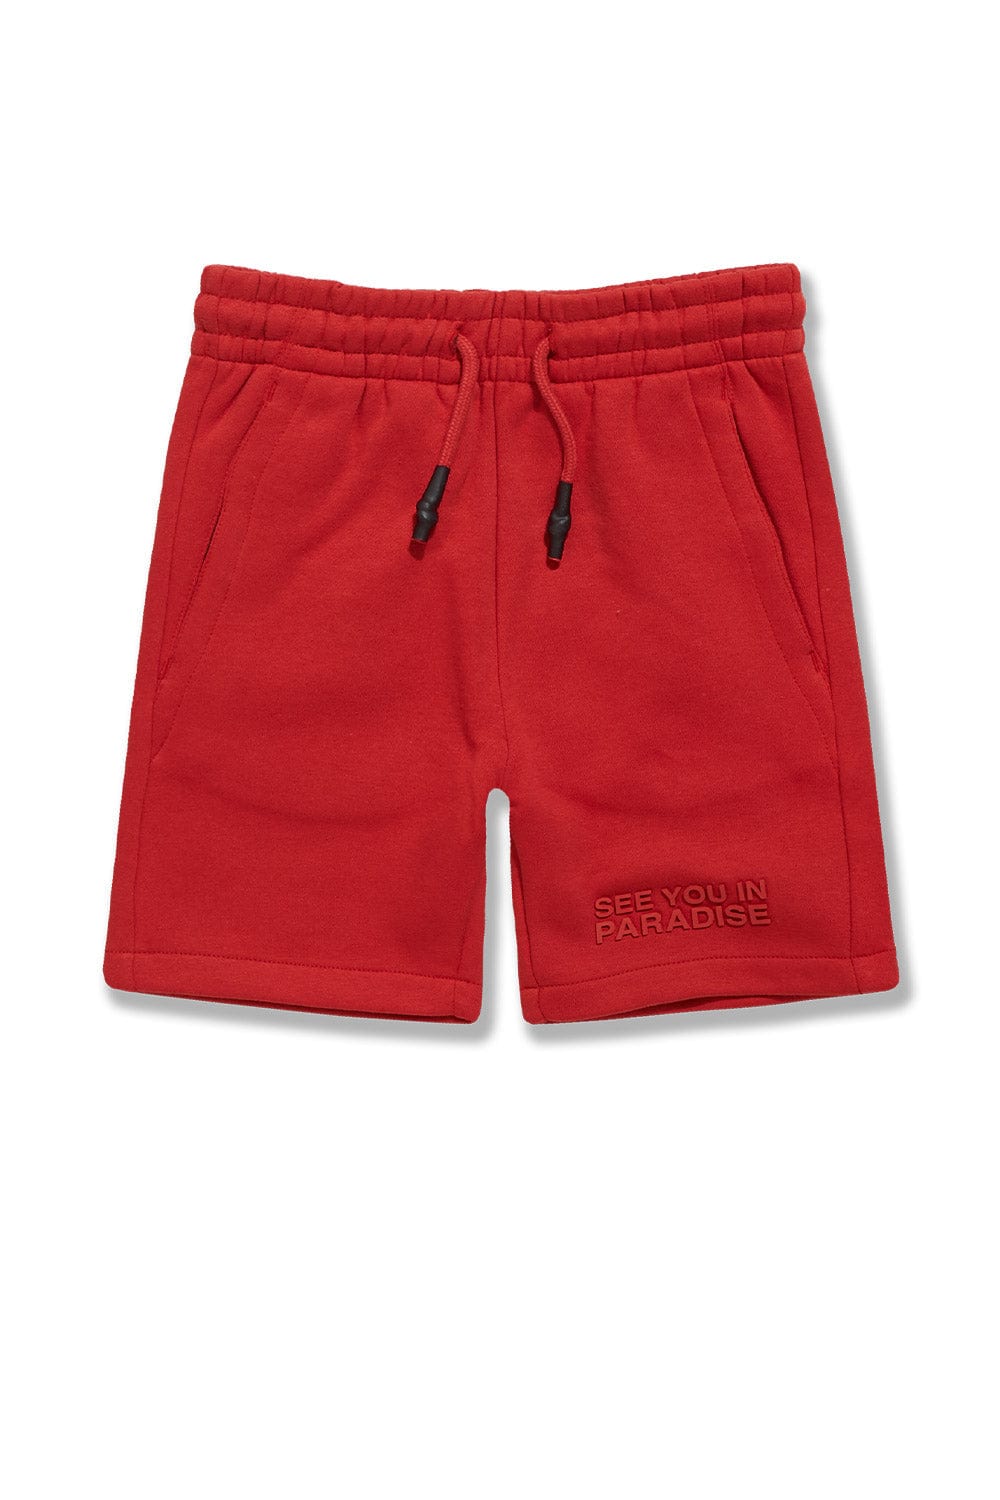 JC Kids Kids Paradise Tonal Shorts (Red) 2 / Red